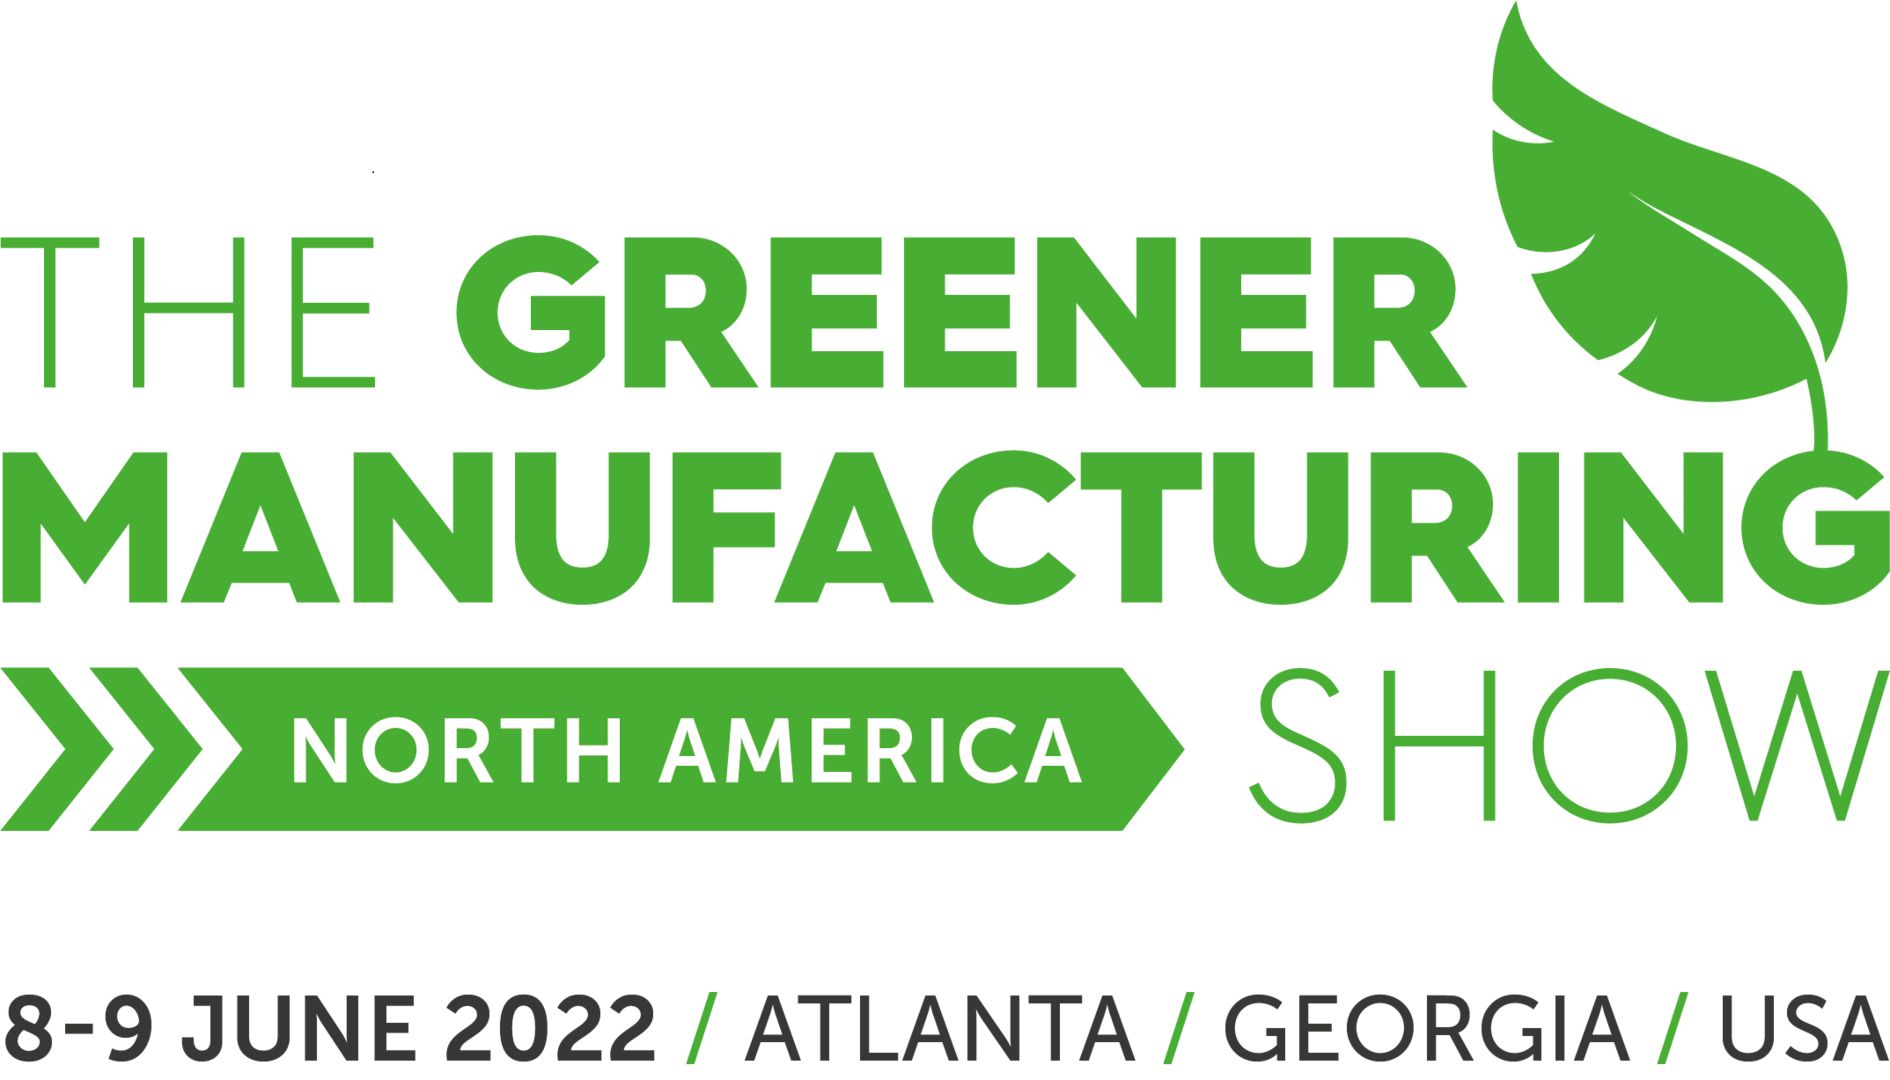 The Greener Manufacturing Show North America, June 8-9 2022, Atlanta, USA